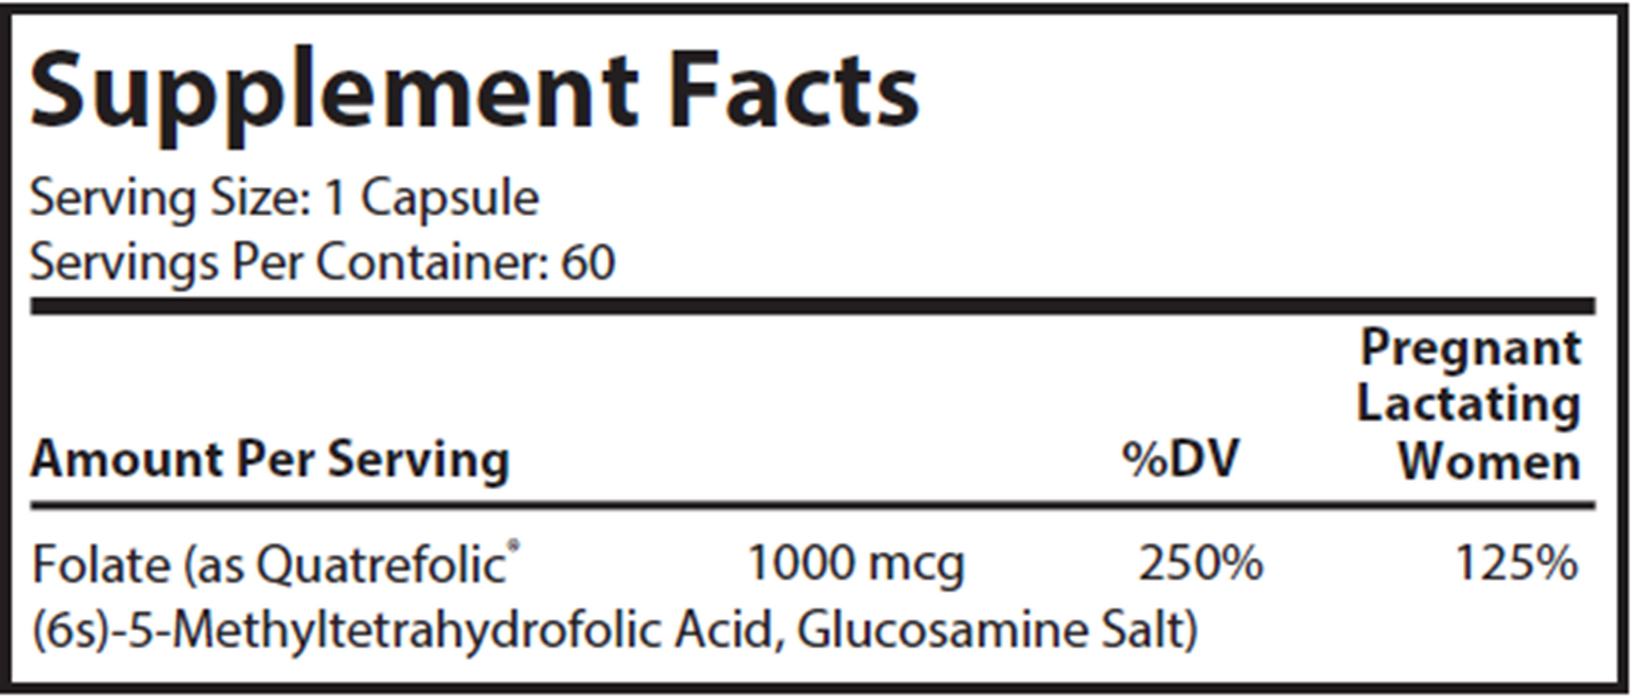 Advanced Nutrition by Zahler Methyl Folate 60 caps